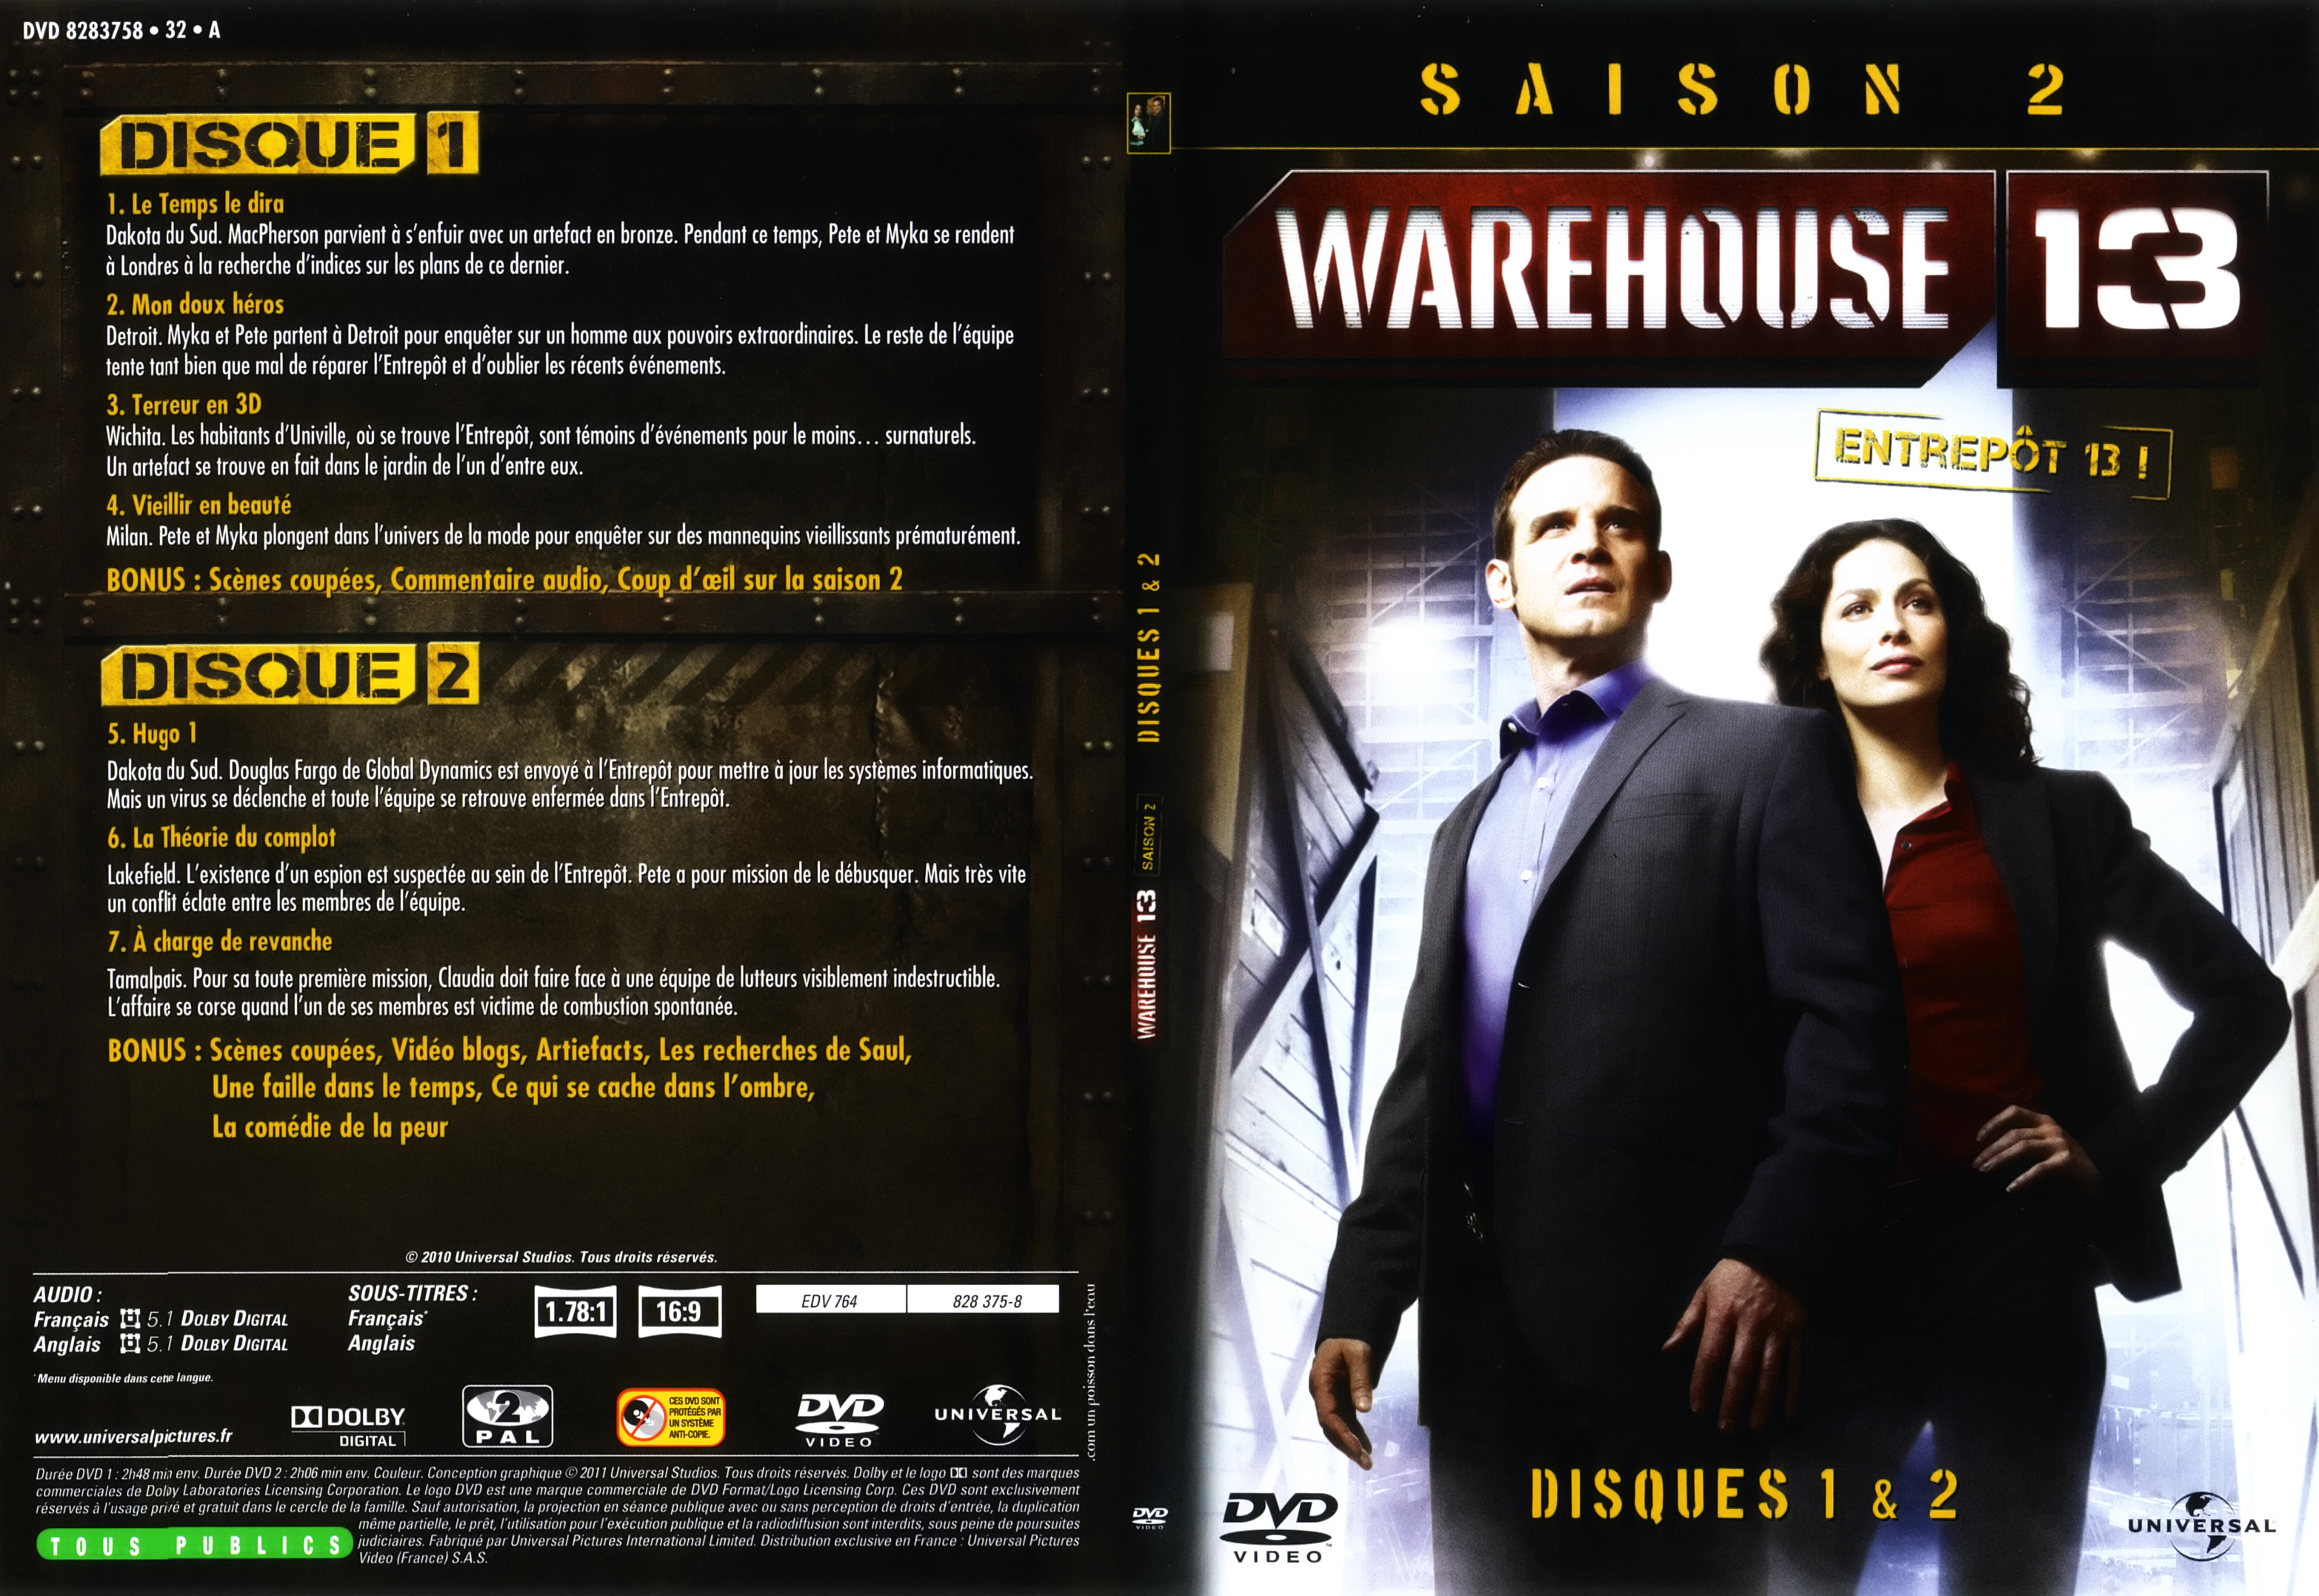 Jaquette DVD Warehouse 13 saison 2 DVD 1